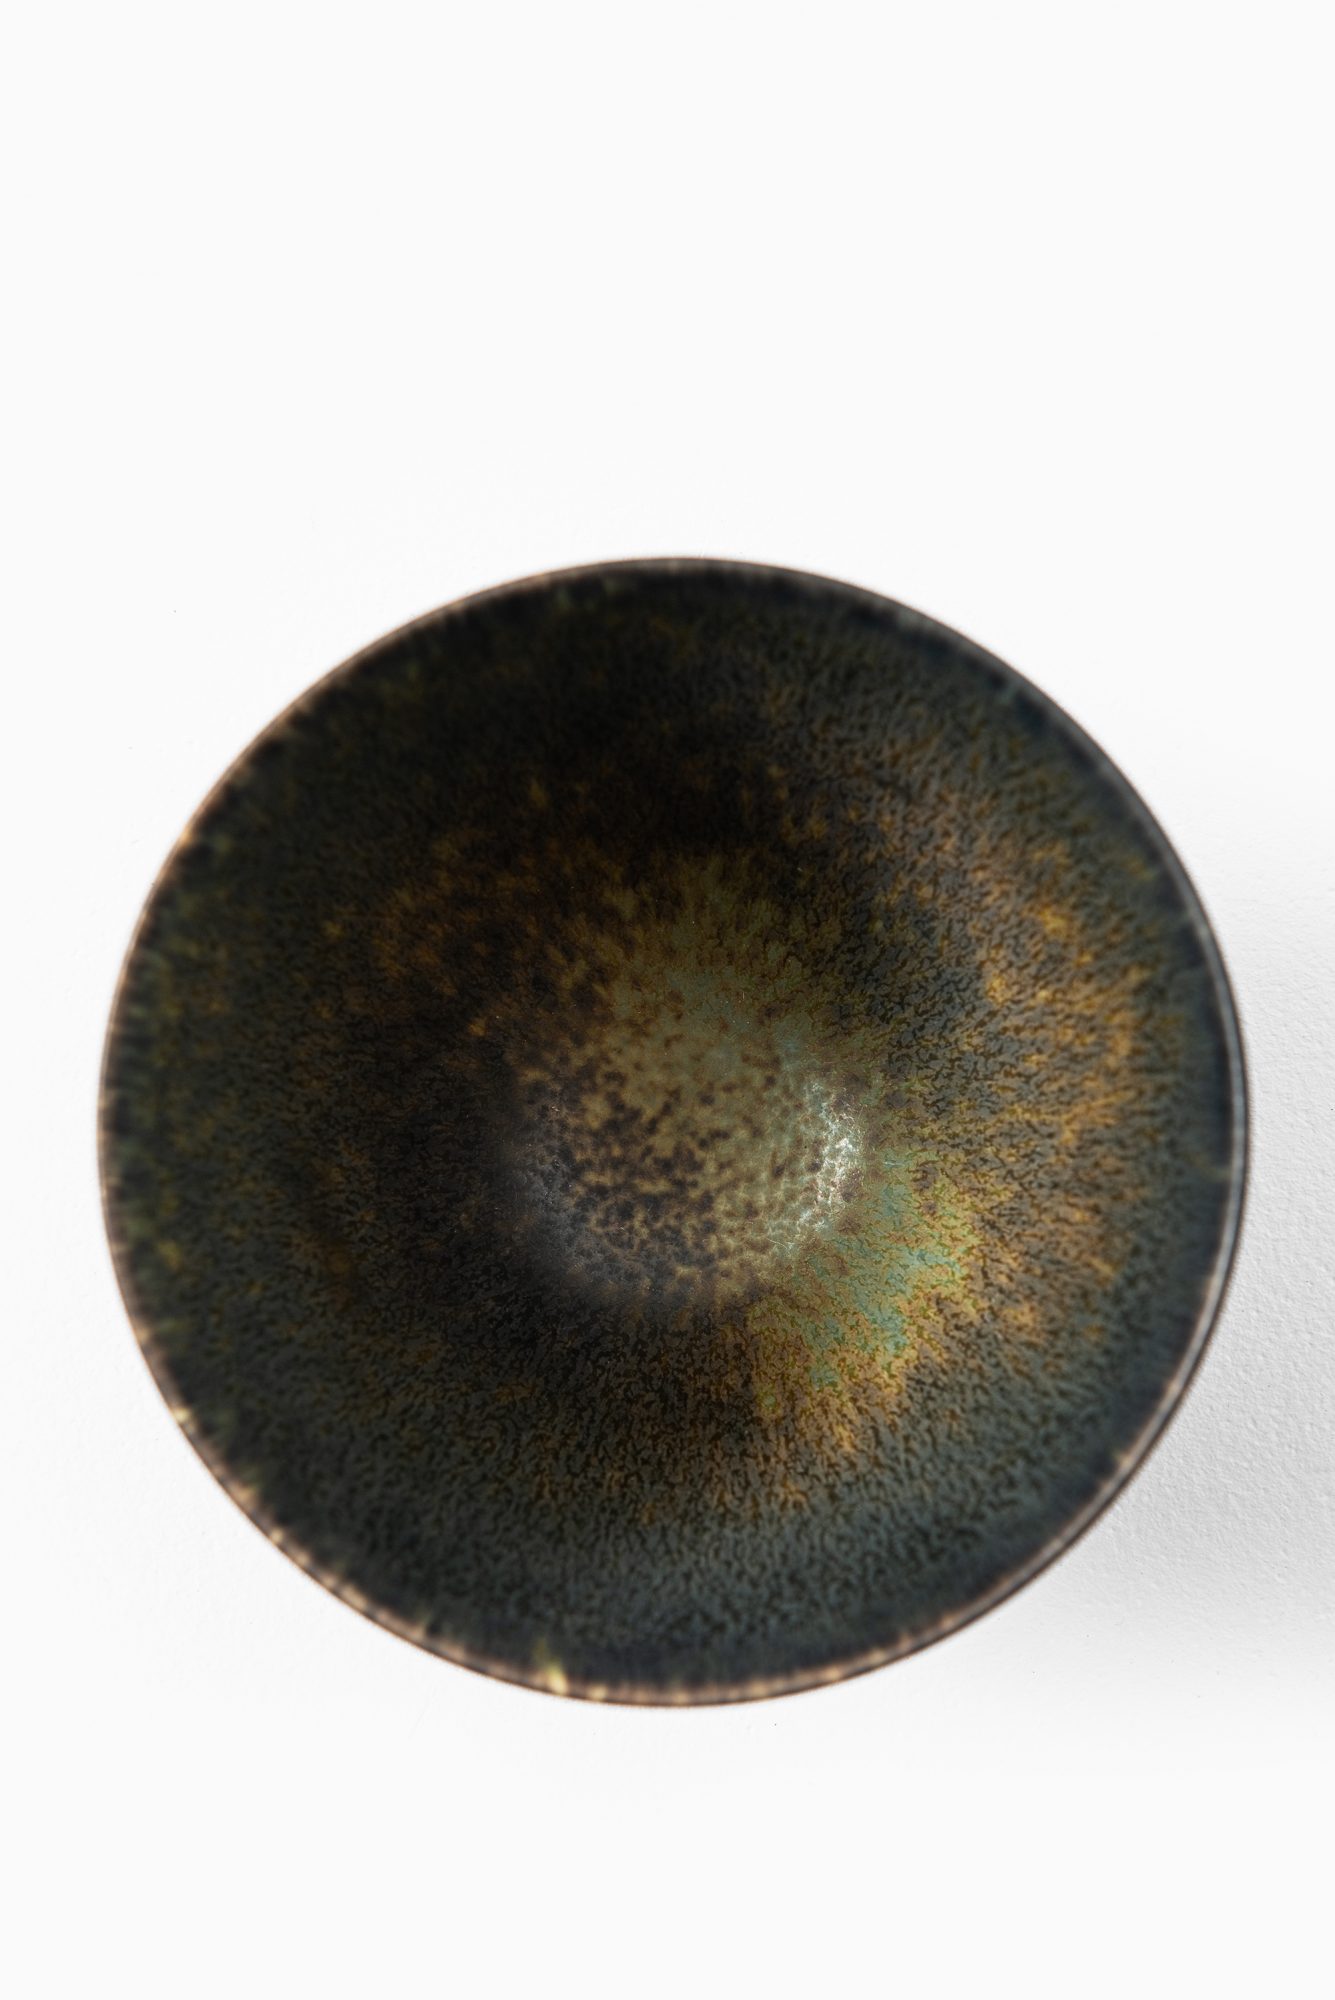 Gunnar Nylund ceramic bowl model ARU at Studio Schalling